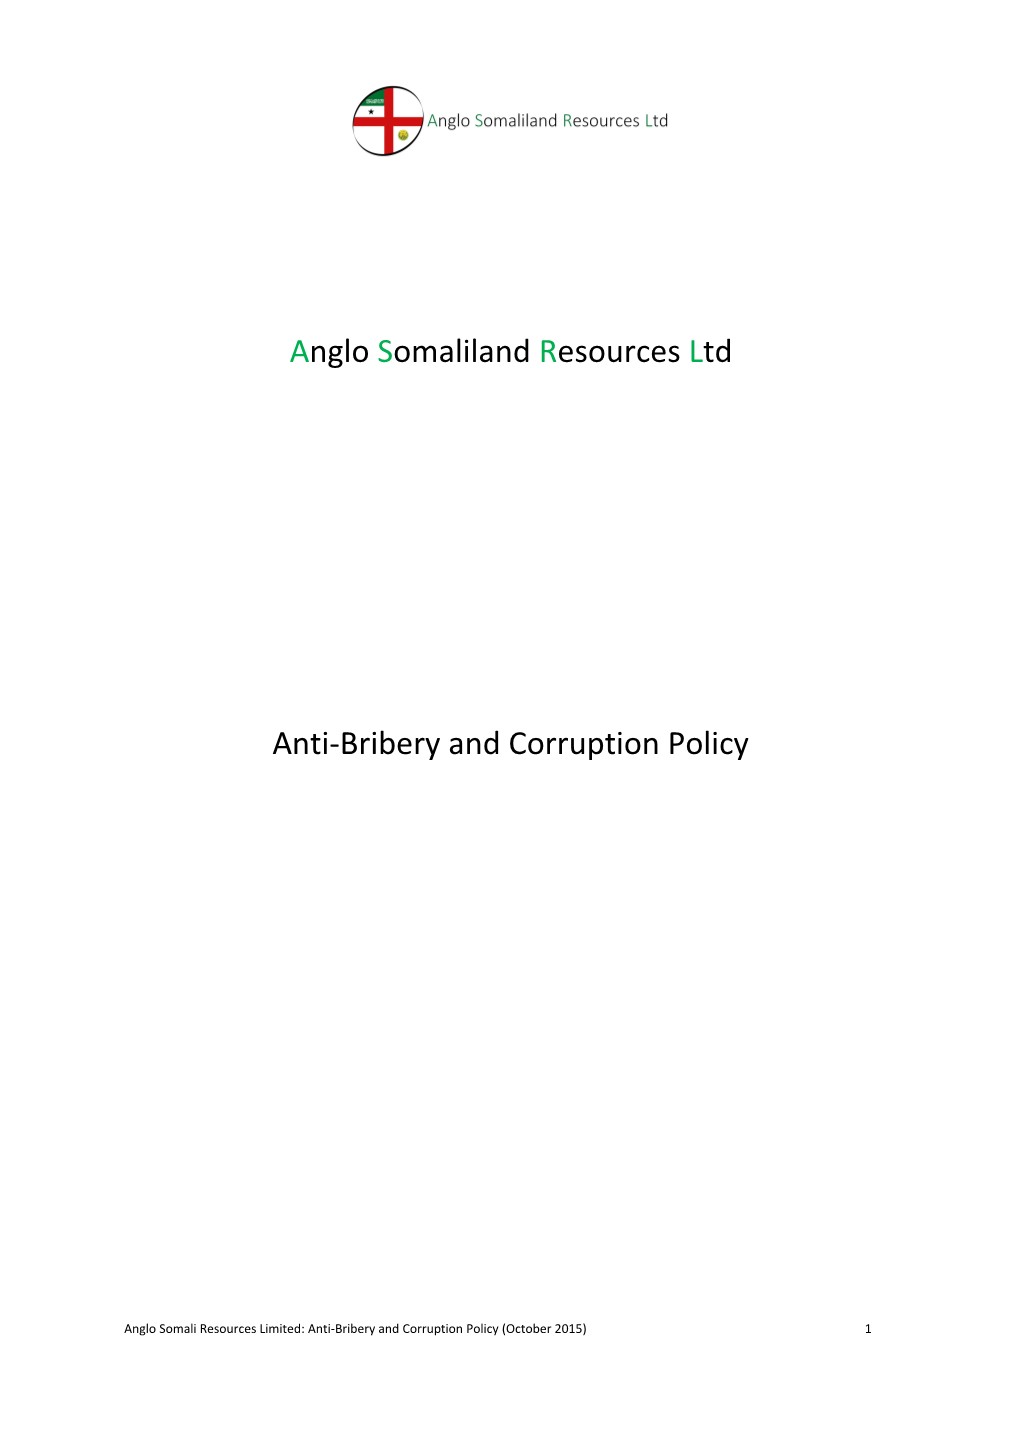 Policy Anti-Bribery and Corruption